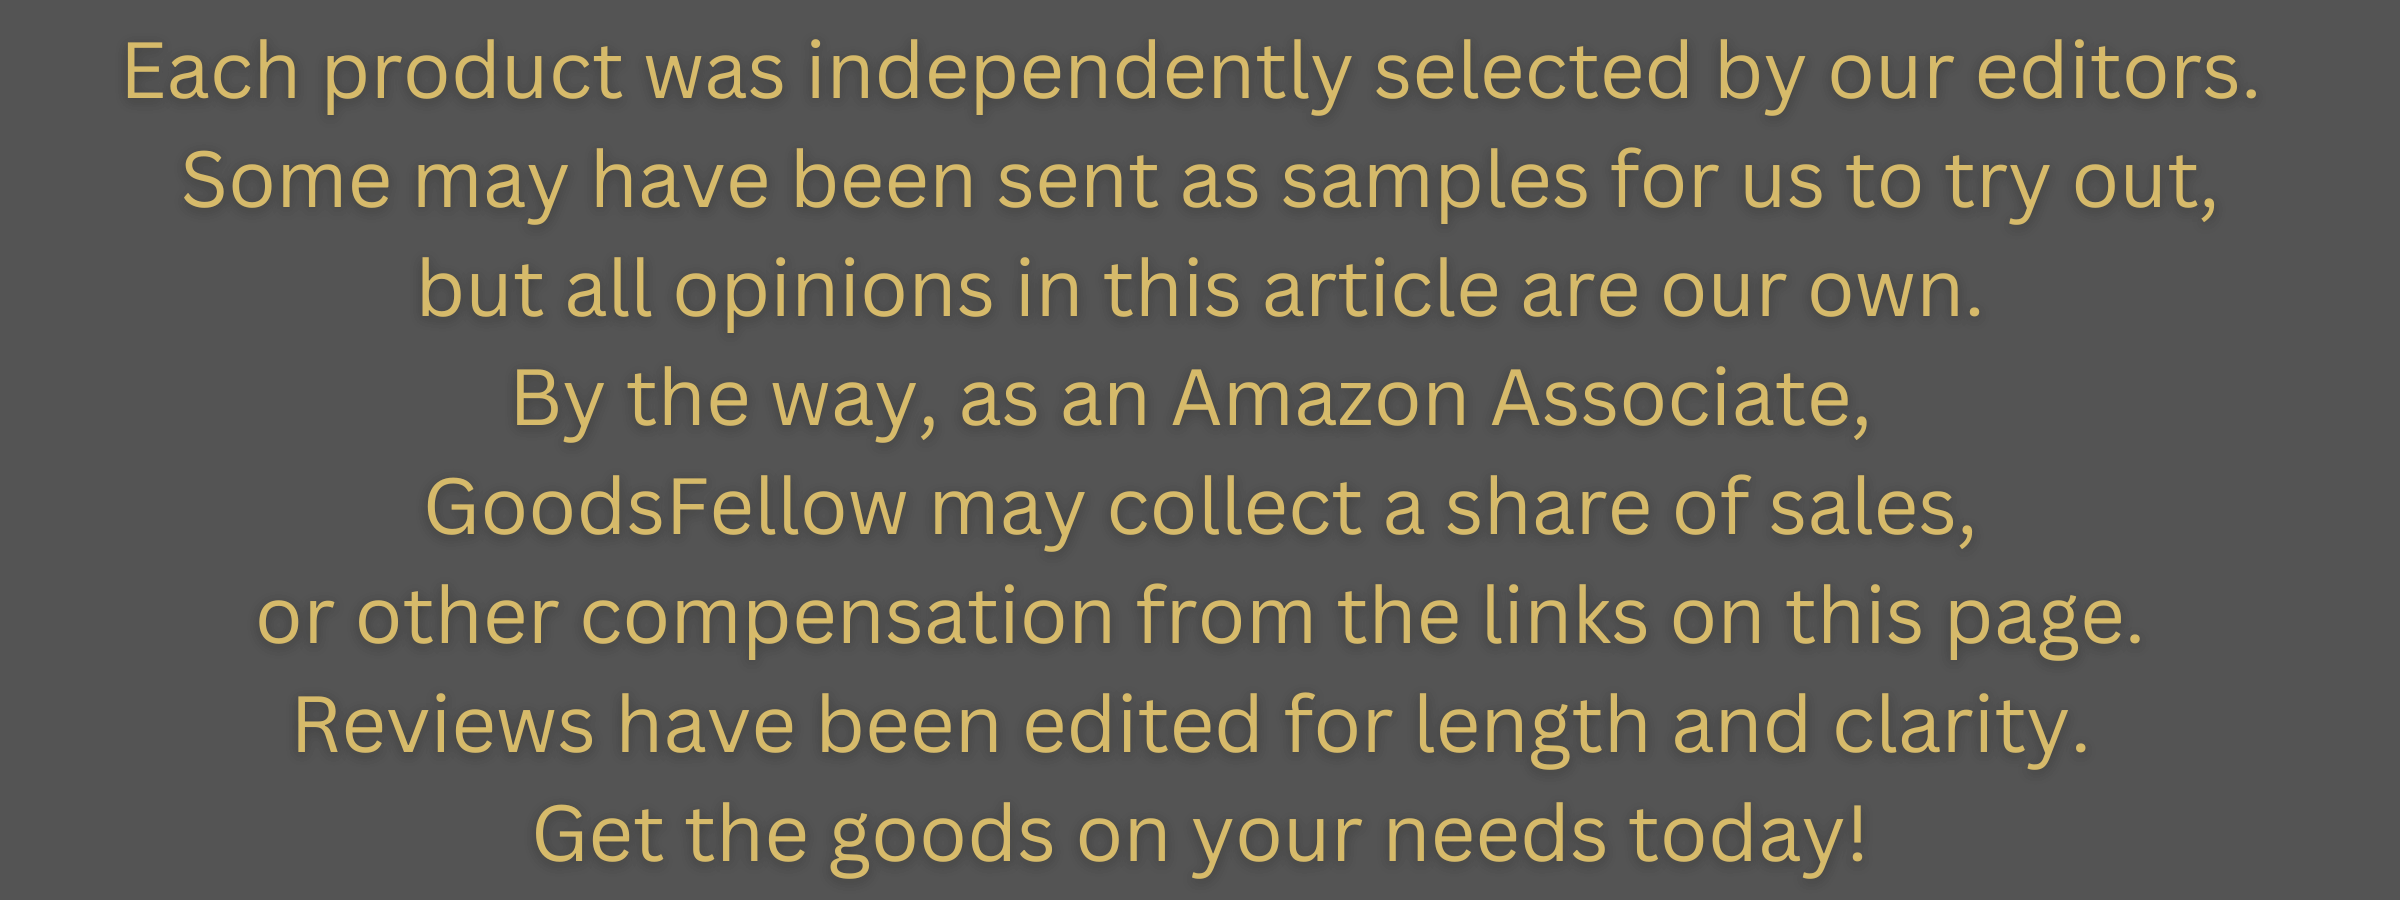 Amazon Associates Disclosures